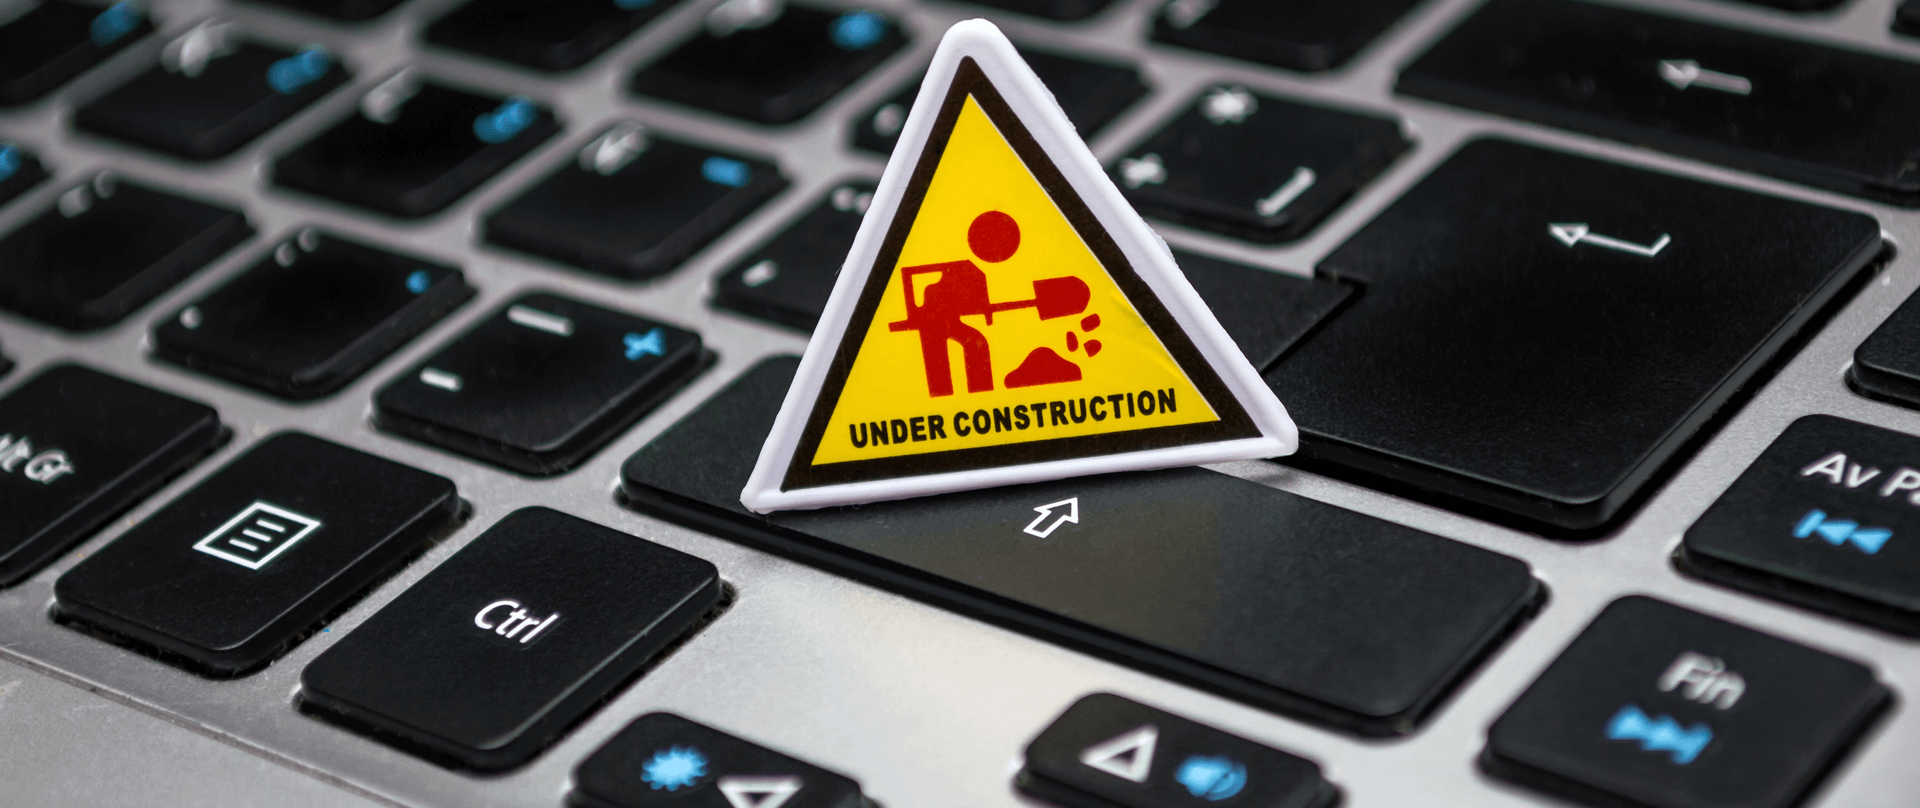 Under Constructione